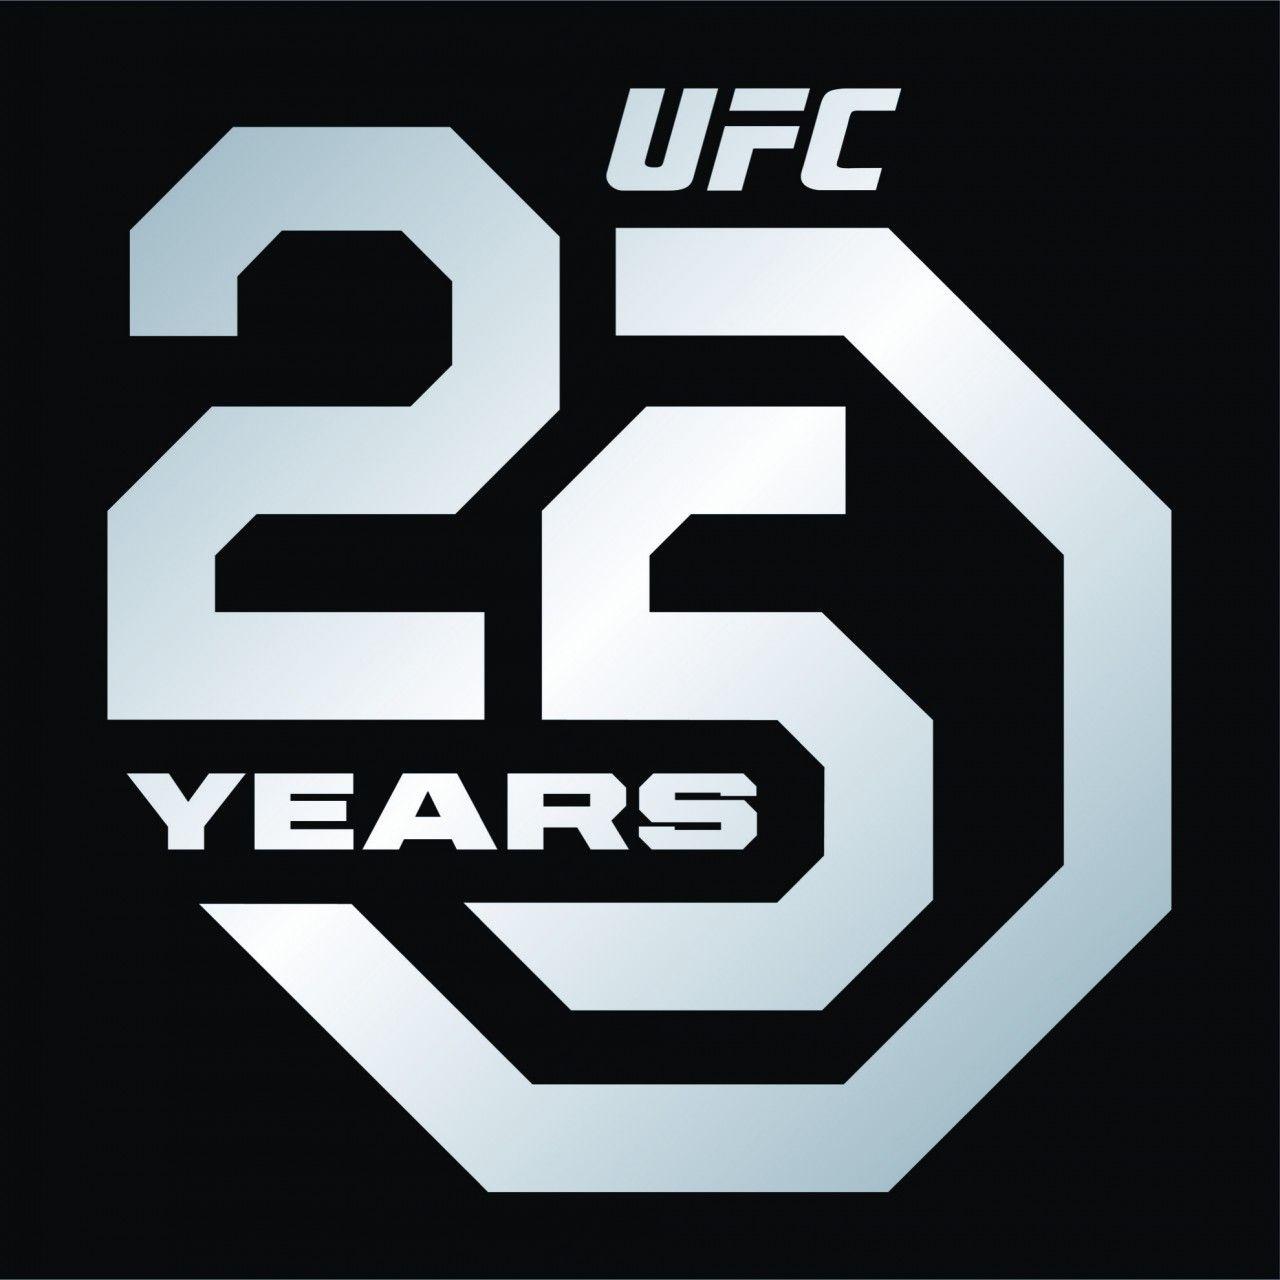 Droga5 Logo - UFC: 25th Anniversary logo by Droga5 | Creative Works | The Drum